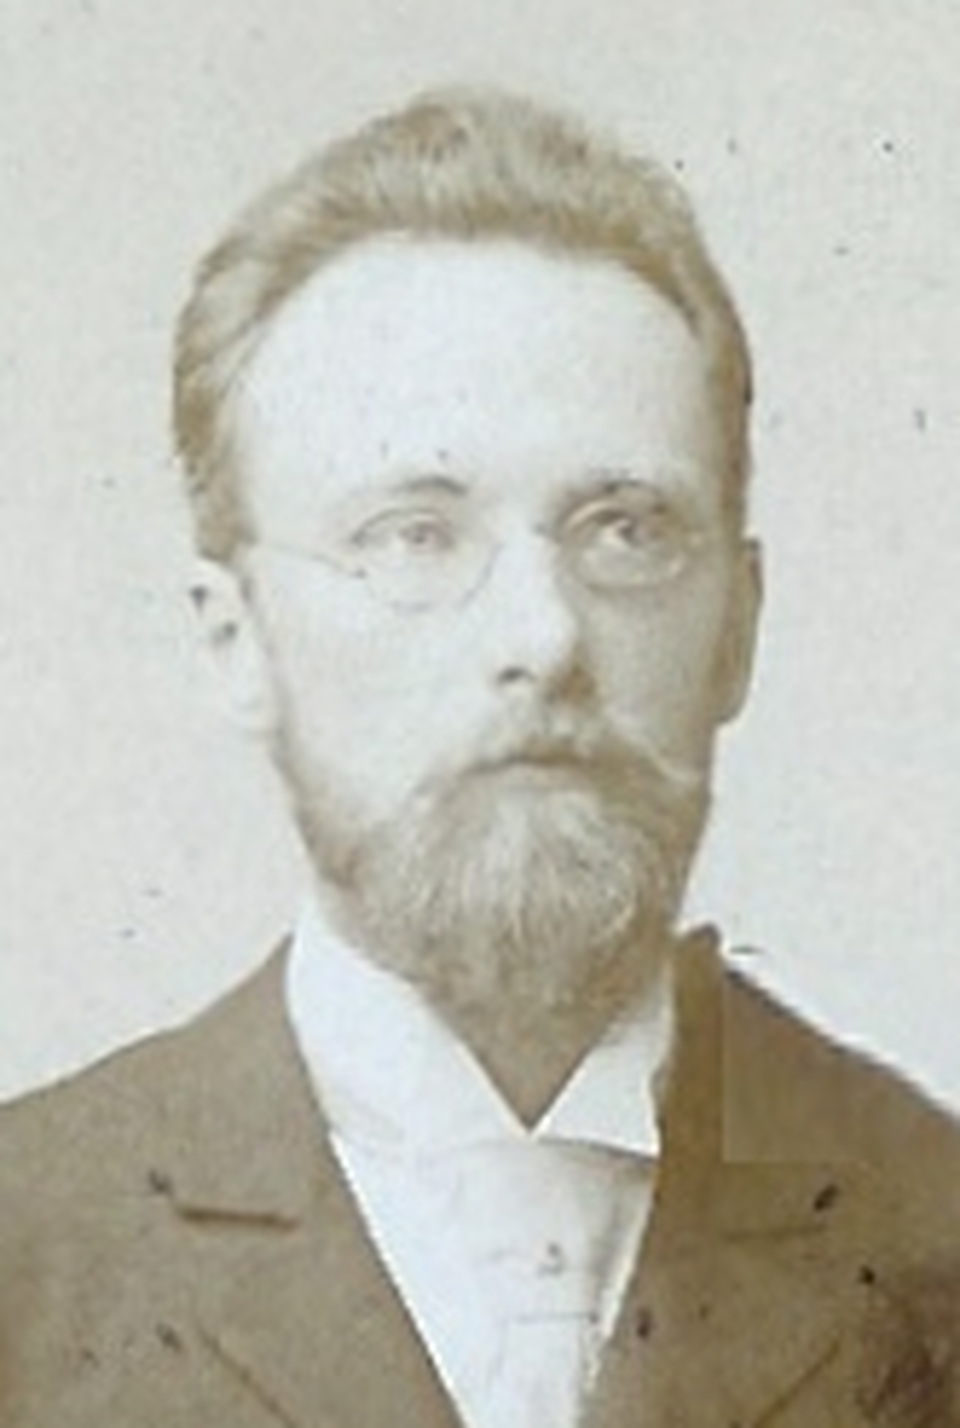 Györgyi Géza 1900 körül (kfki.hu)